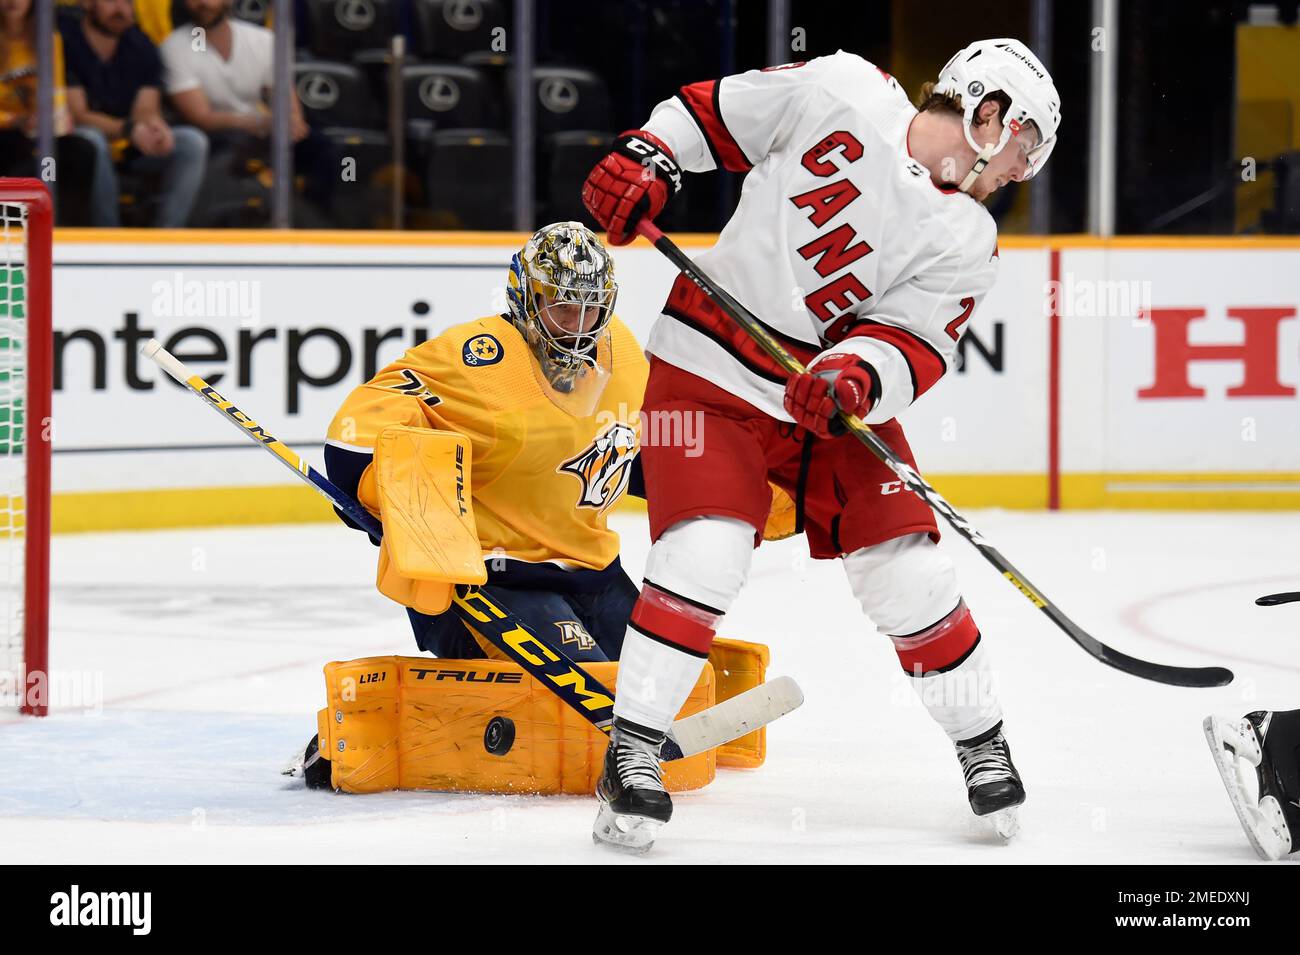 Photos: Hurricanes vs Predators in Game 6 of NHL hockey playoff series